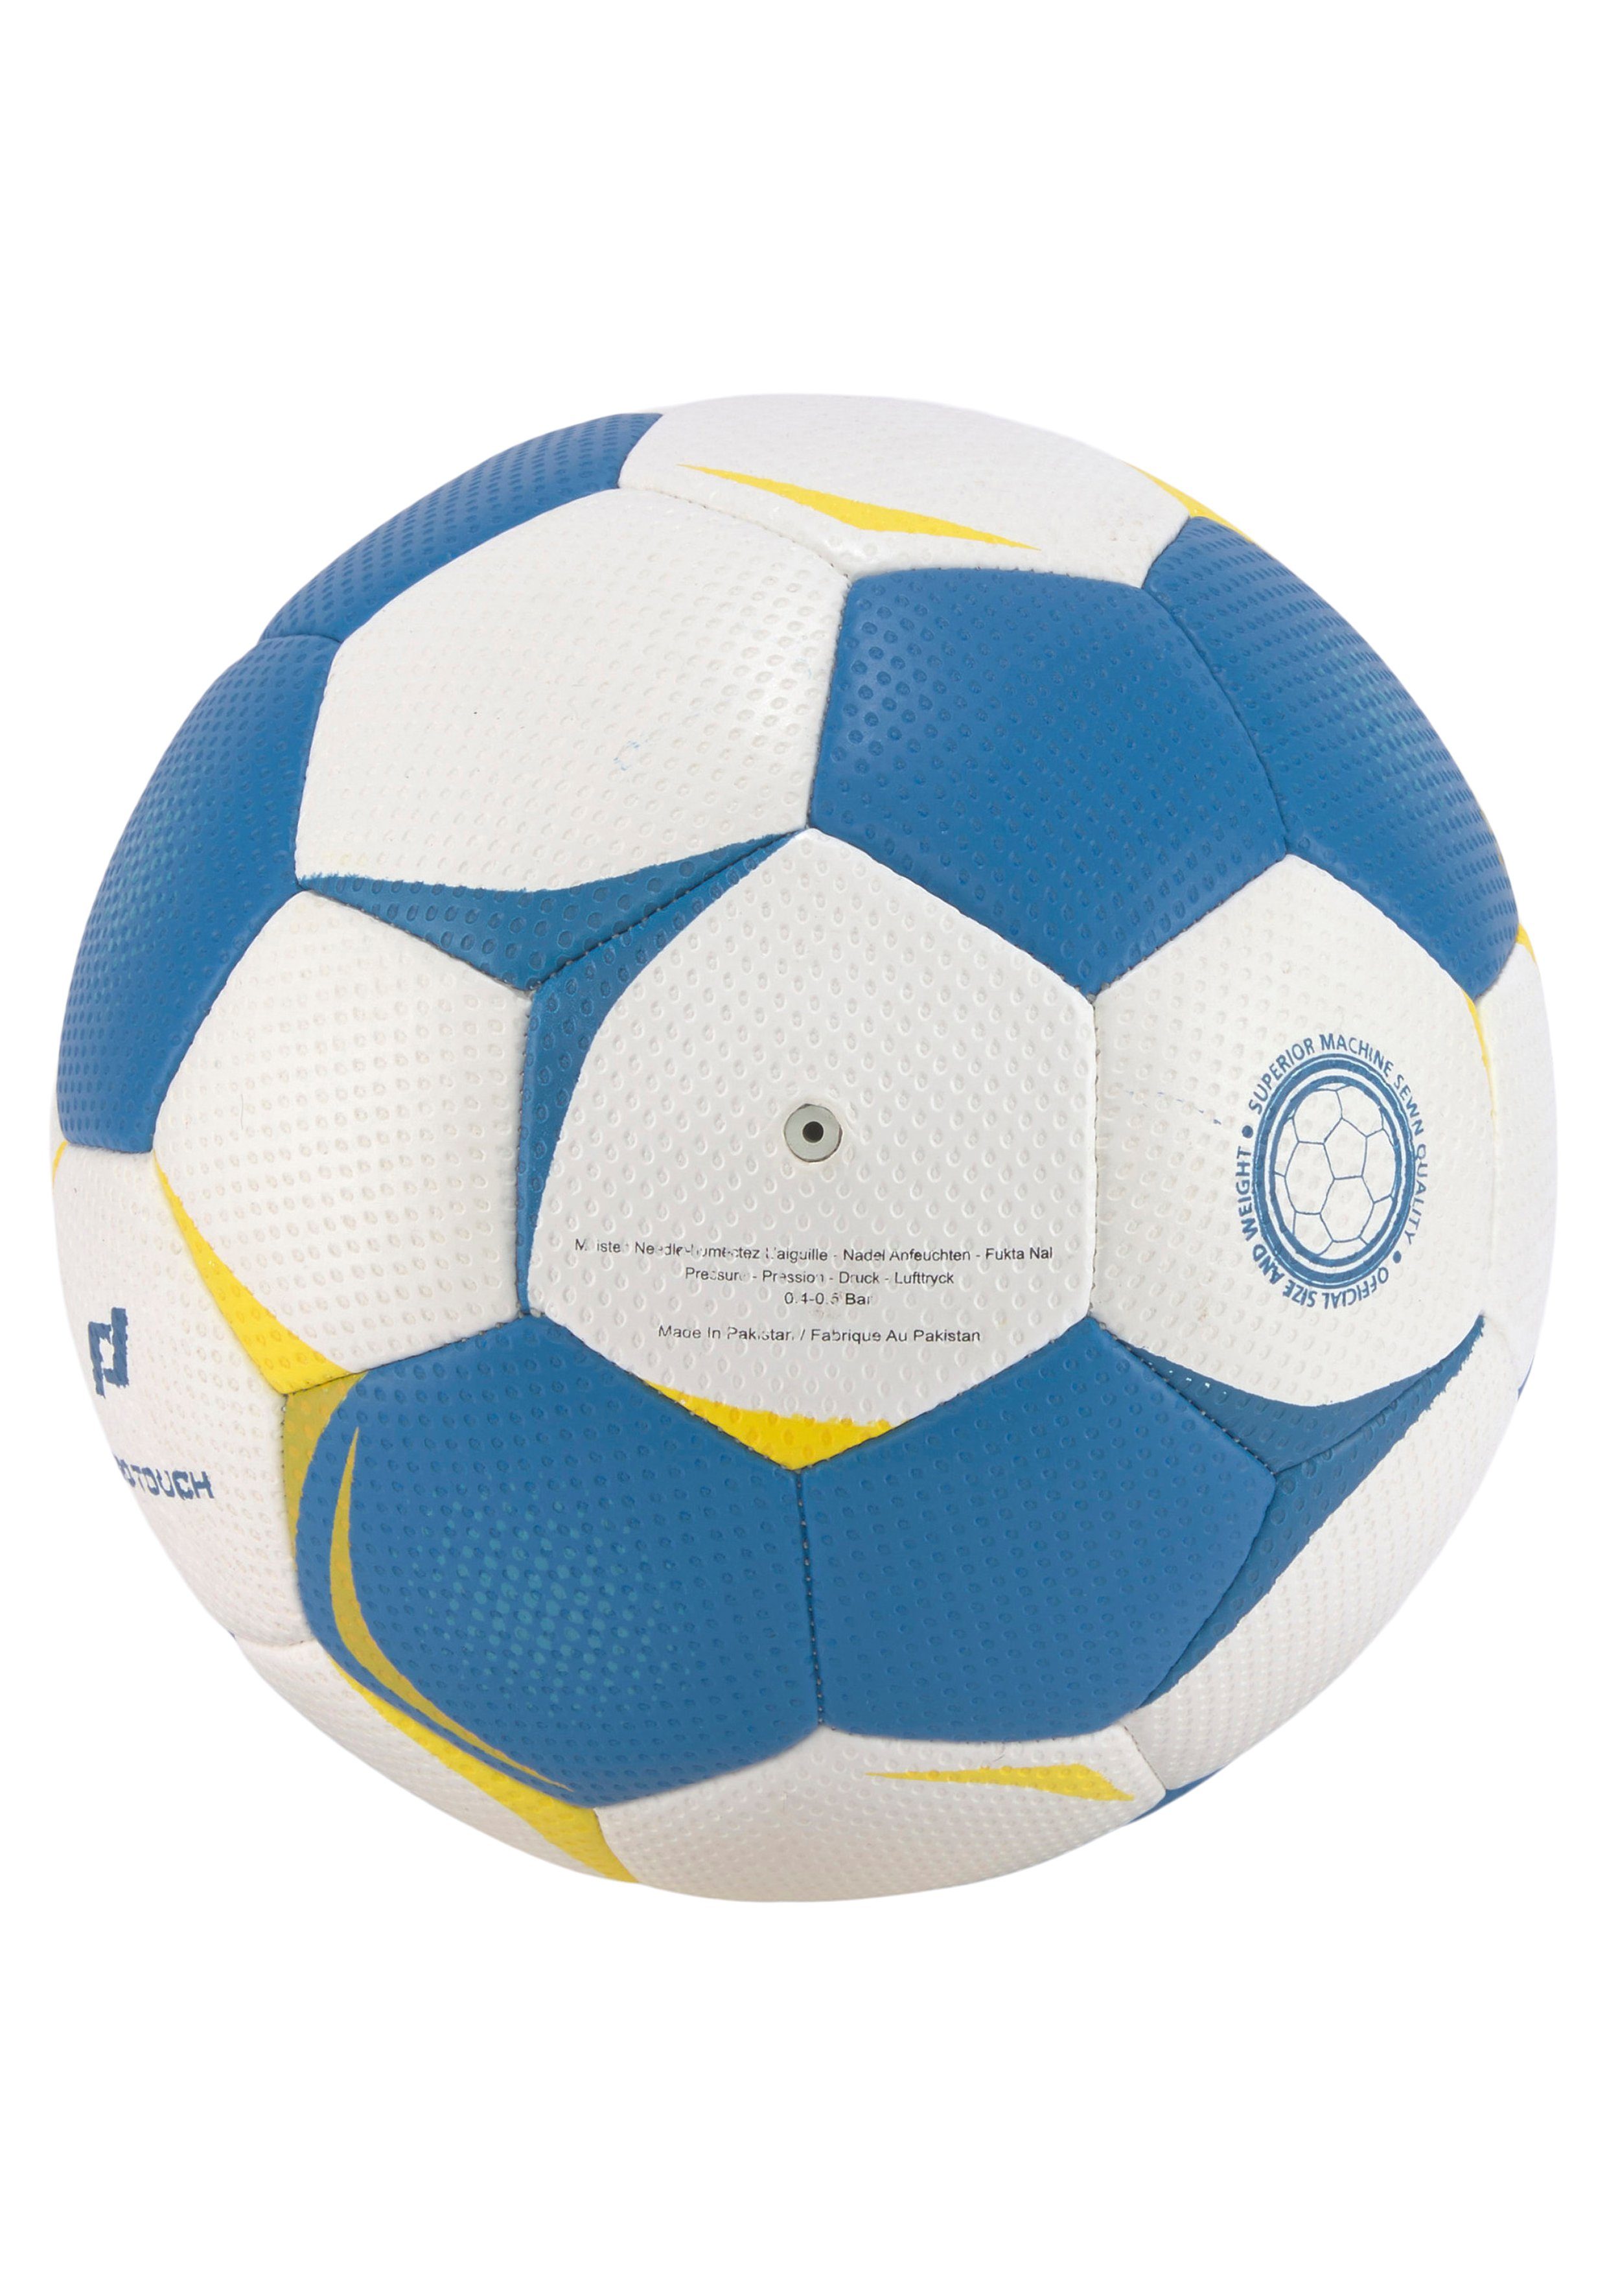 Touch All Court Handball 902 WHITE/BLUE Pro DARK/YELL Handball